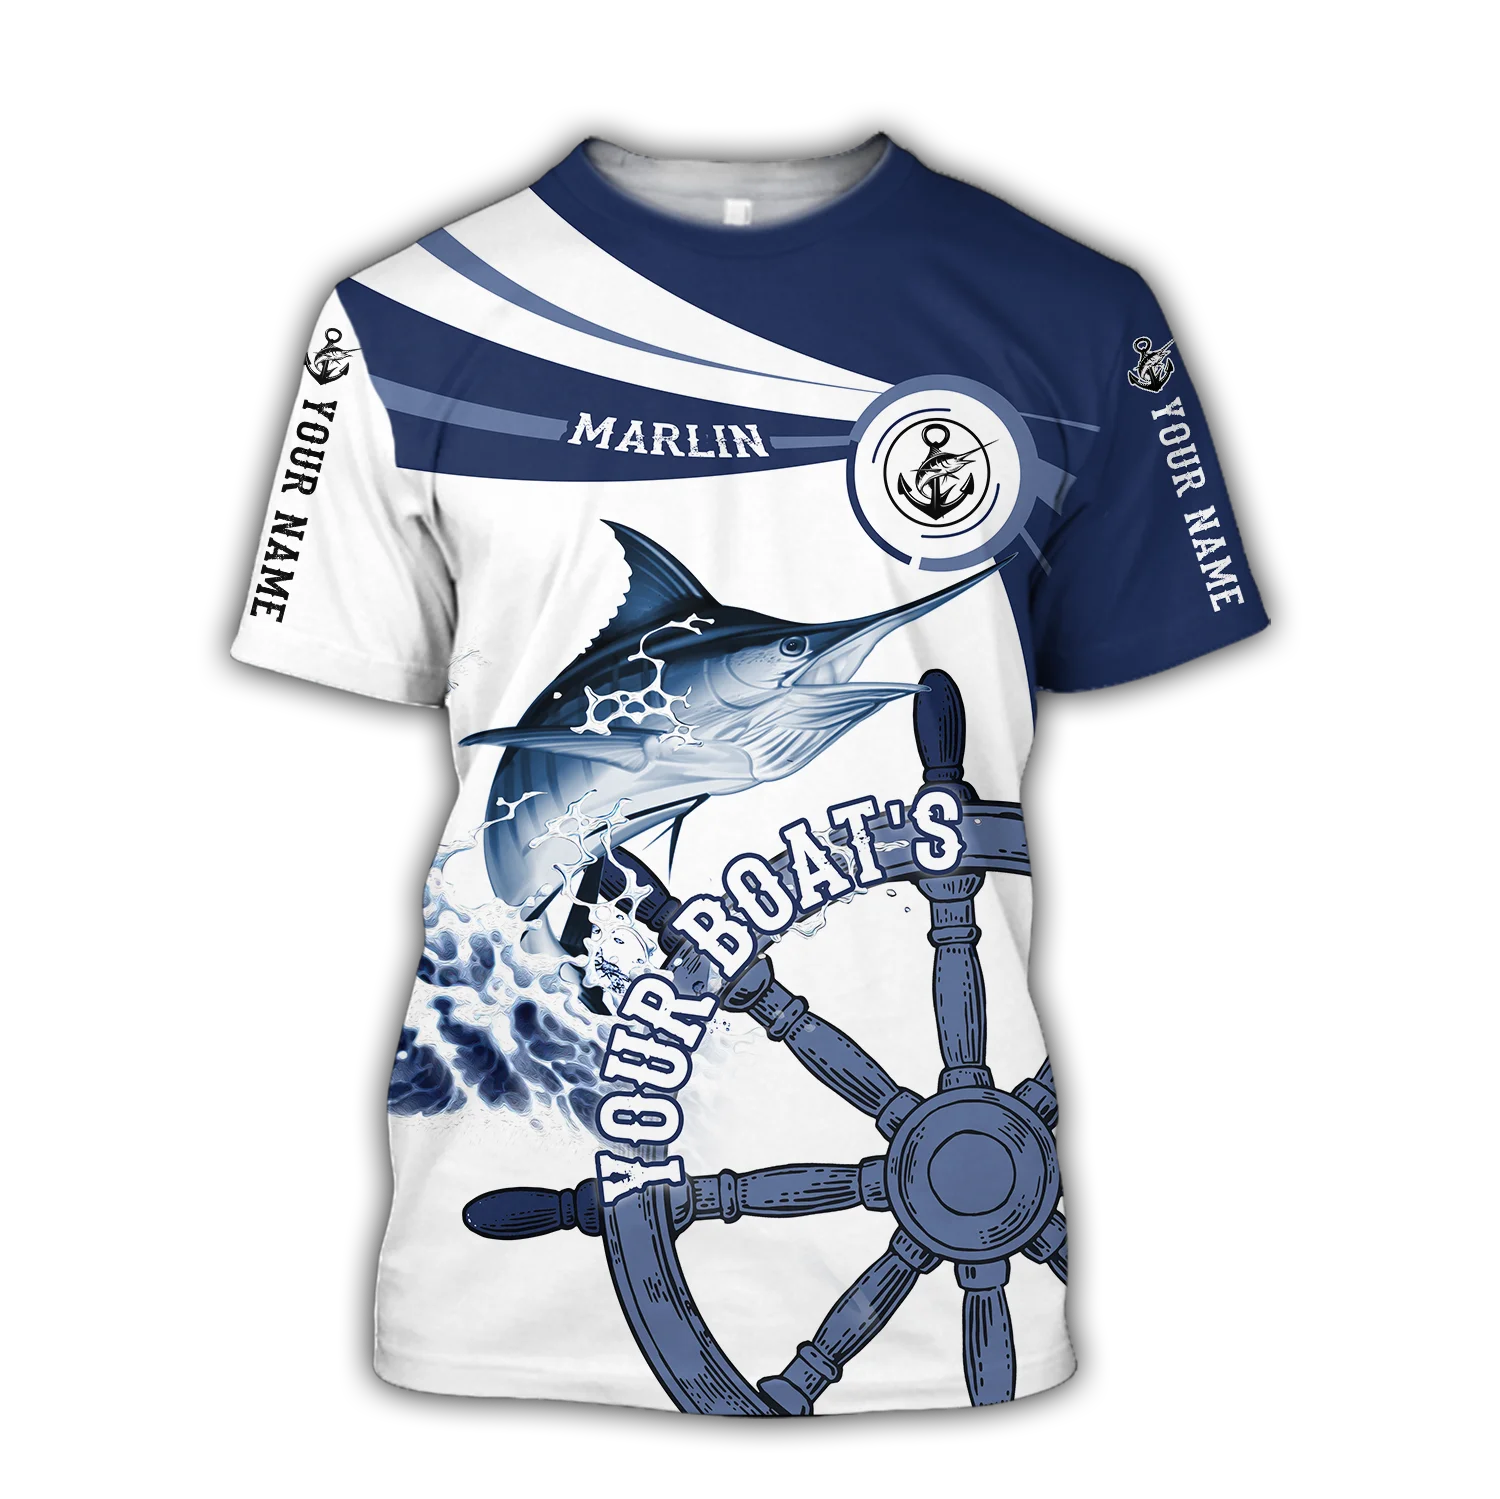 Custom name Mahi-mahi fishing scales 3D Printing Mens t shirt Summer  Fashion Unisex Short sleeve T-shirt Casual Tee tops TX243 - AliExpress